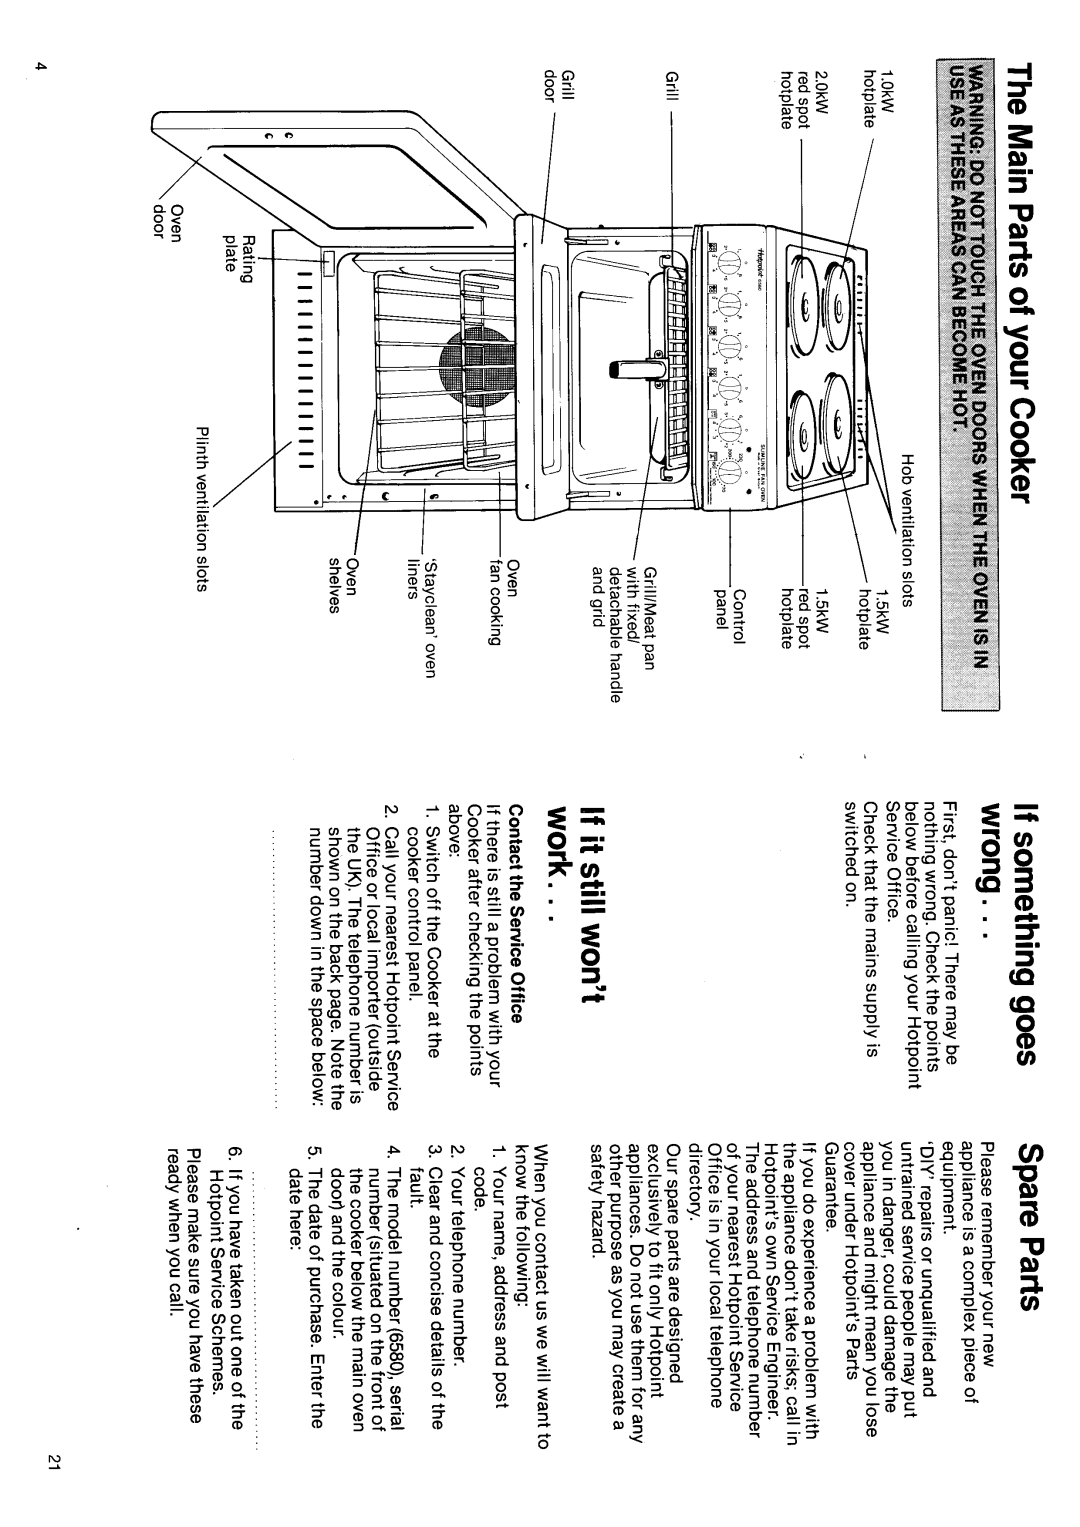 Hotpoint 6580 manual 